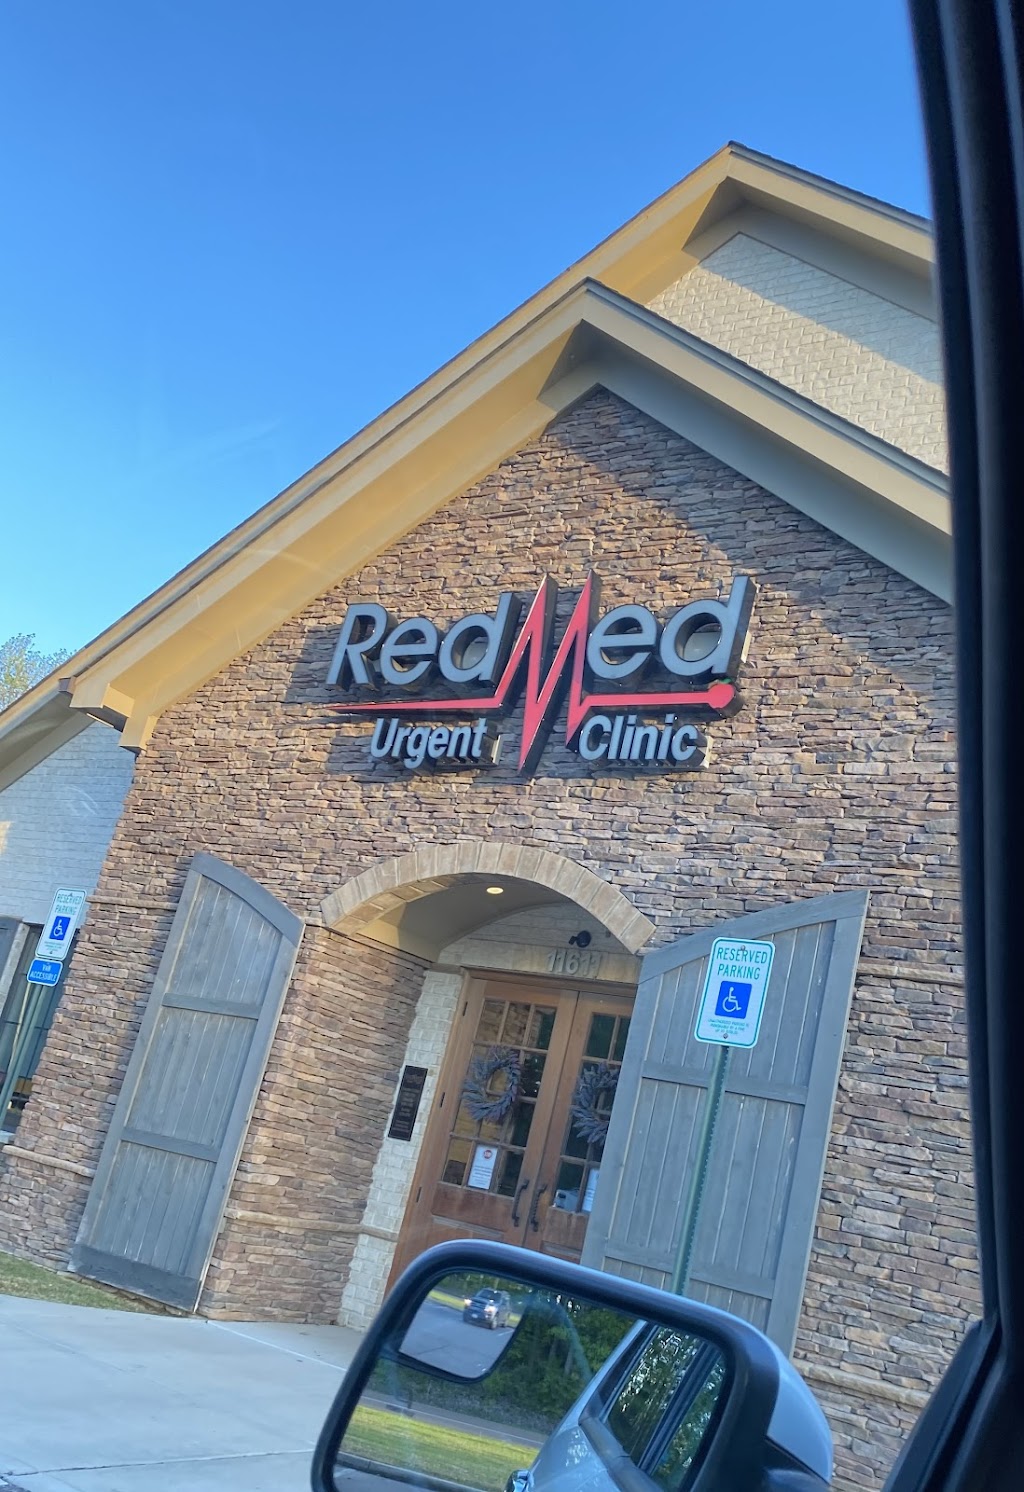 RedMed Urgent Clinic of Crosstown | 11611 US-51, Atoka, TN 38004, USA | Phone: (901) 842-1760